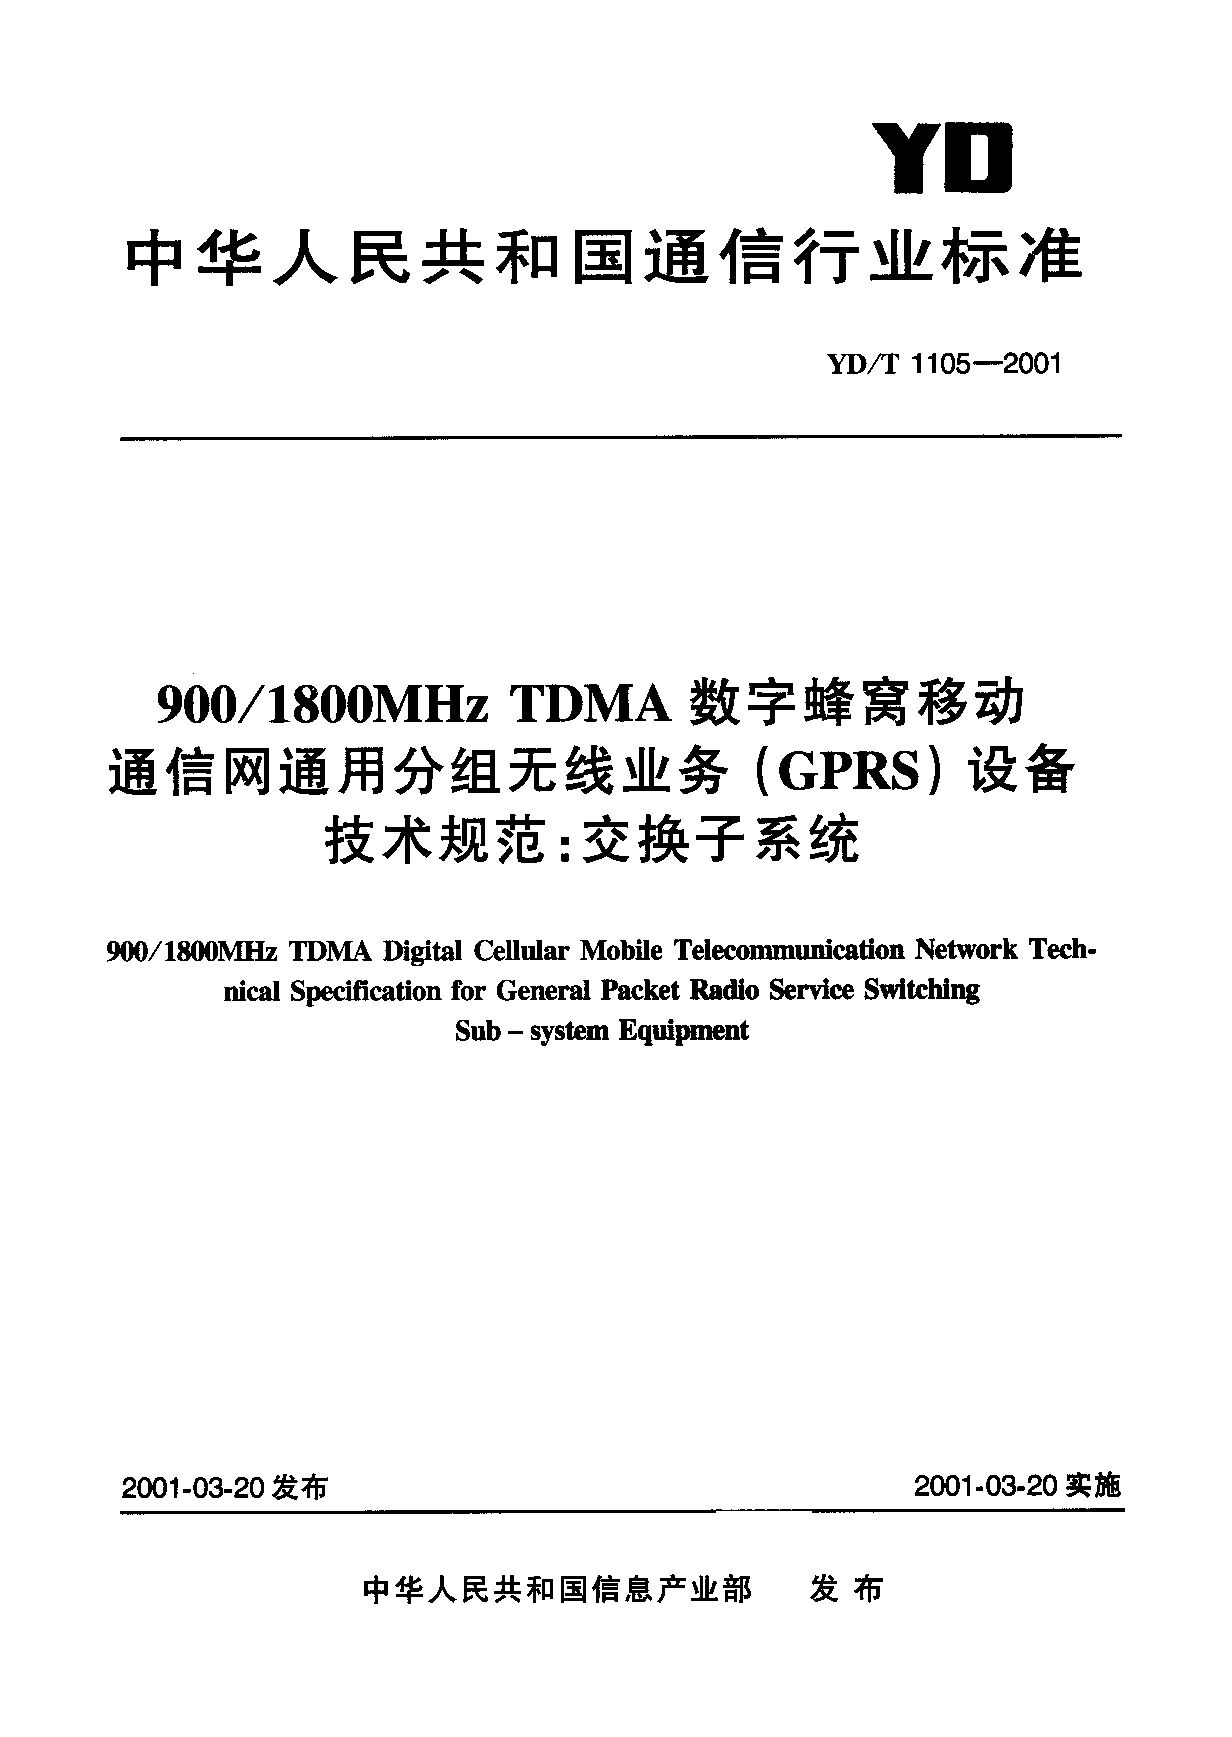 YD/T 1105-2001封面图